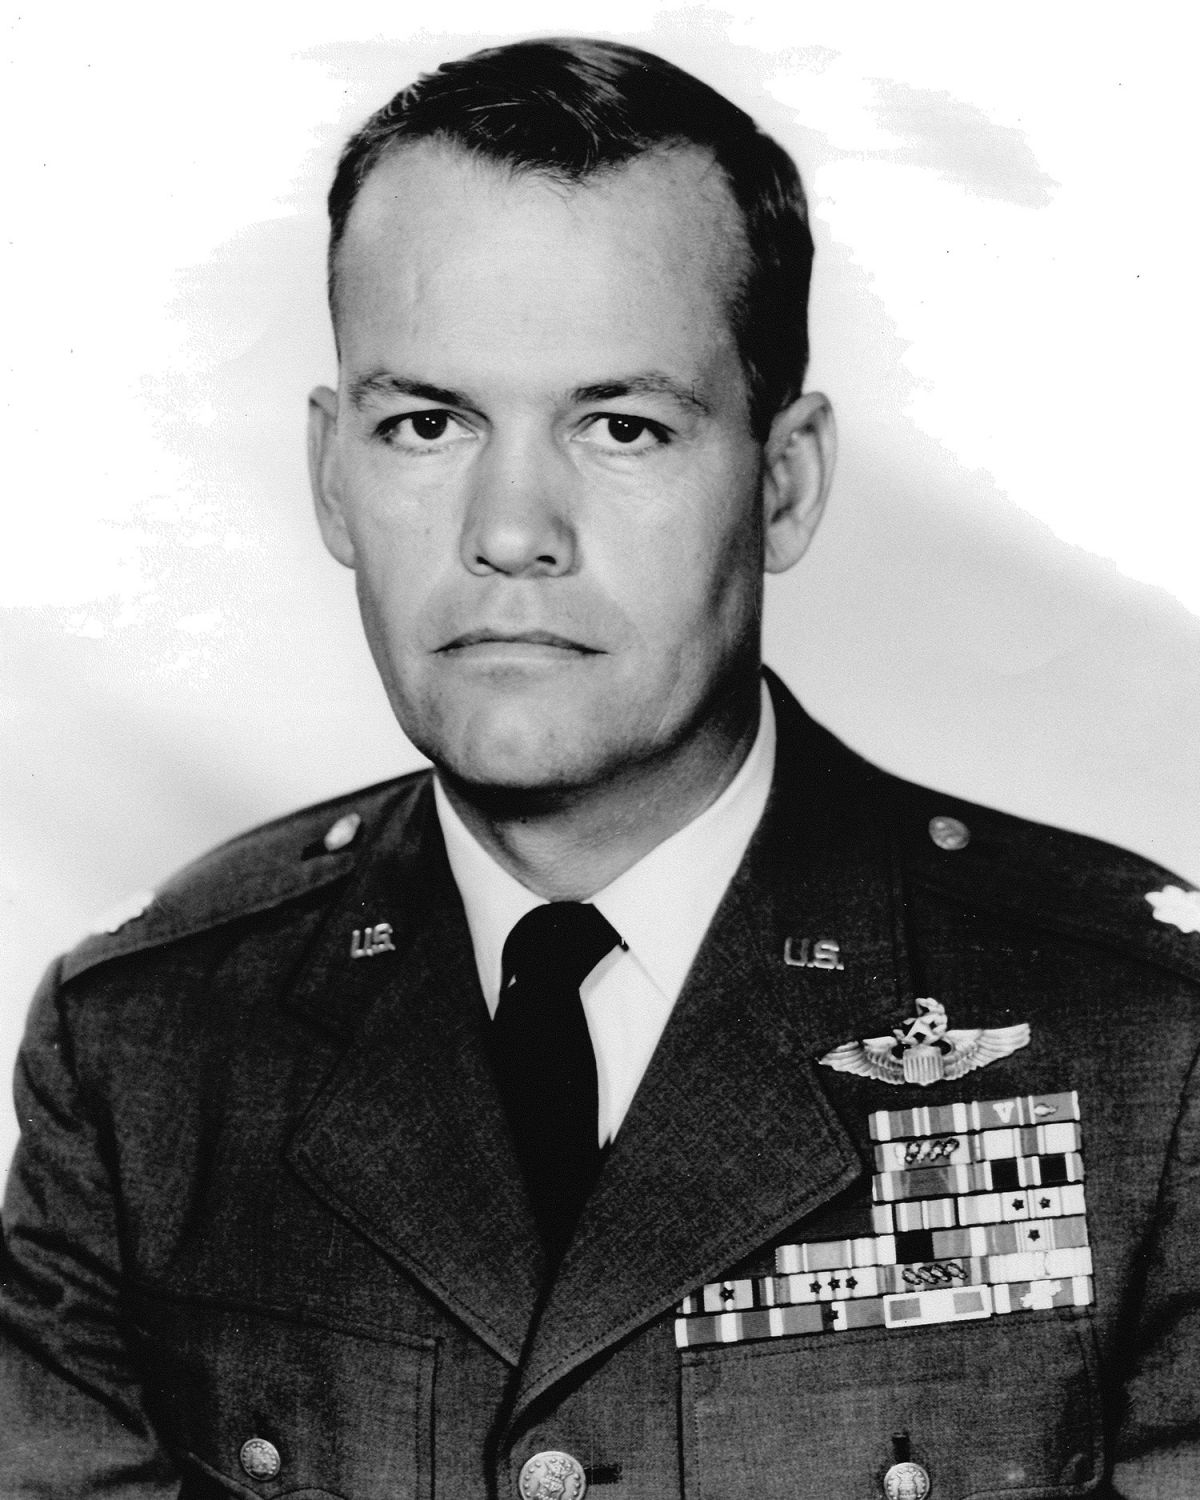 Lt. Col. Charles A. Riley